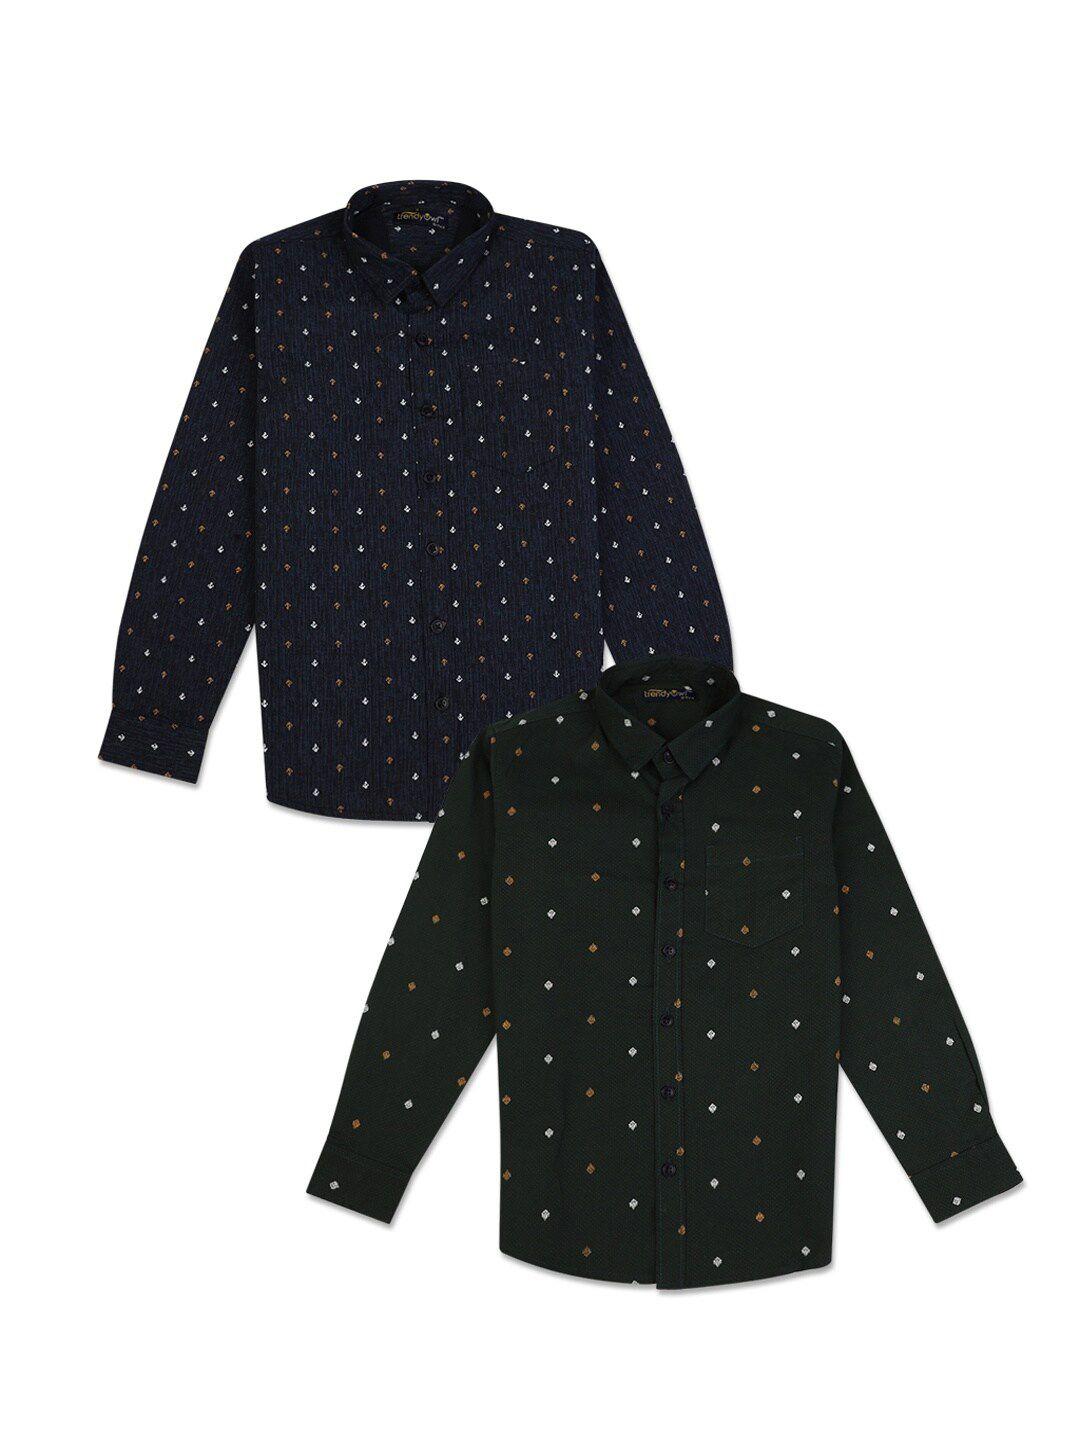 v-mart boys pack of 2 navy blue standard printed casual shirt